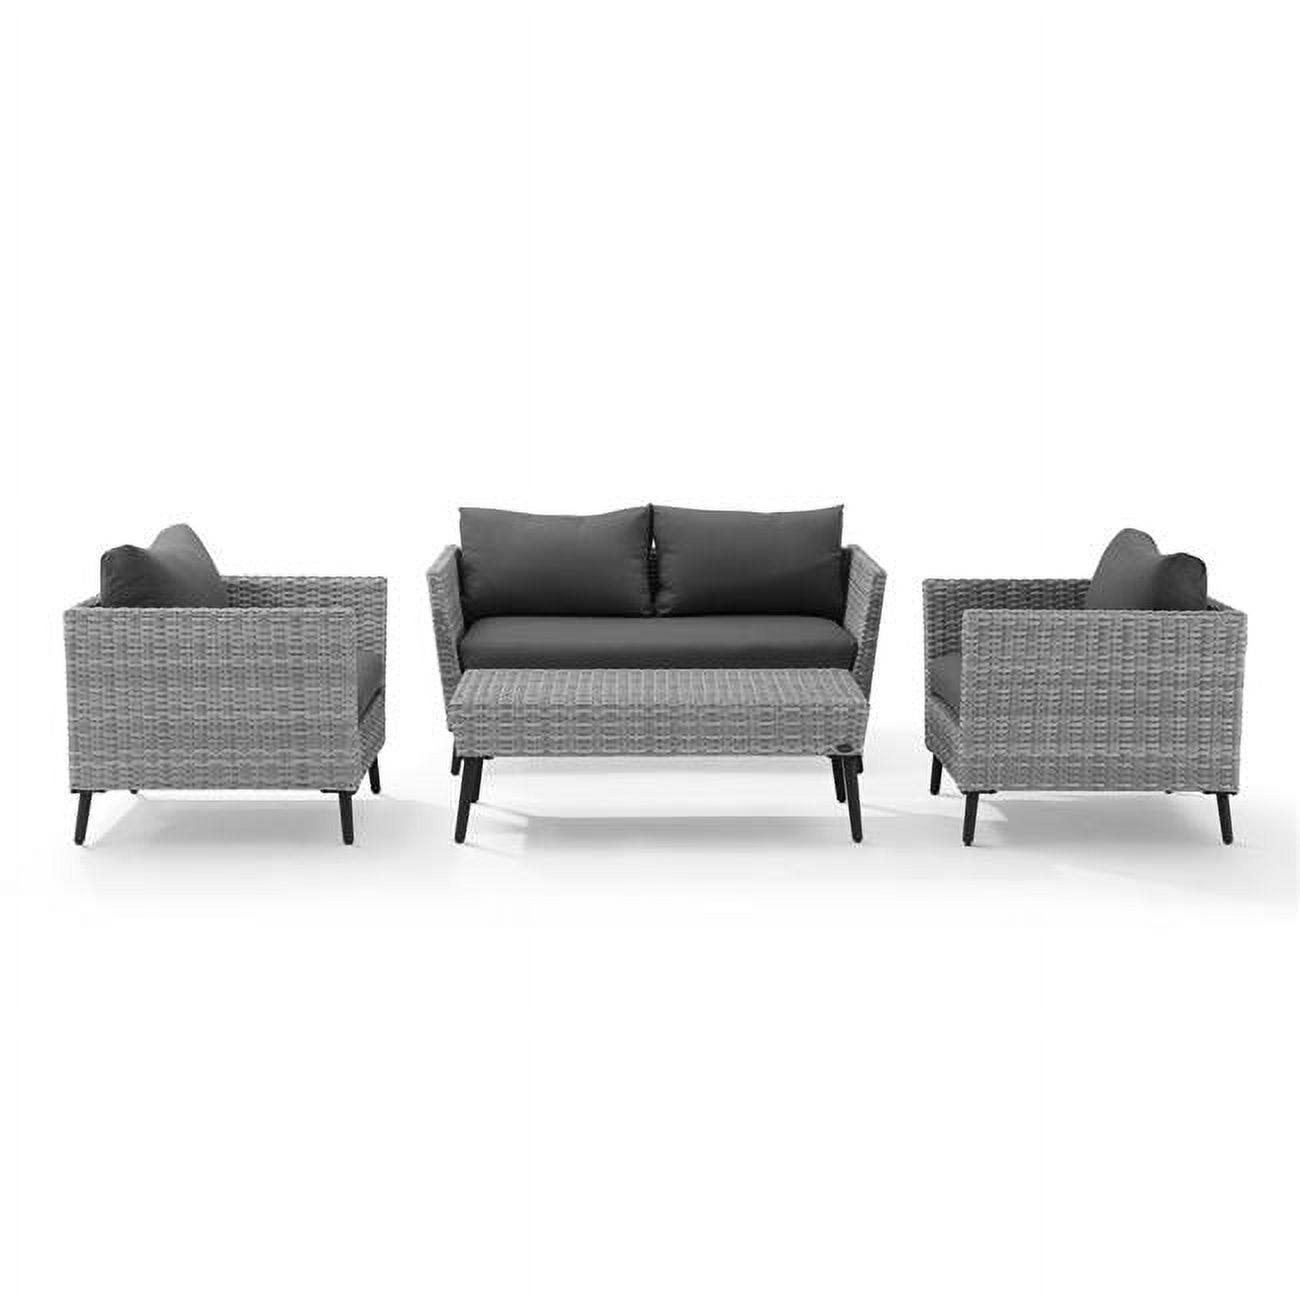 Crosley Richland 4 Piece Wicker Patio Sofa Set in Gray - image 1 of 8